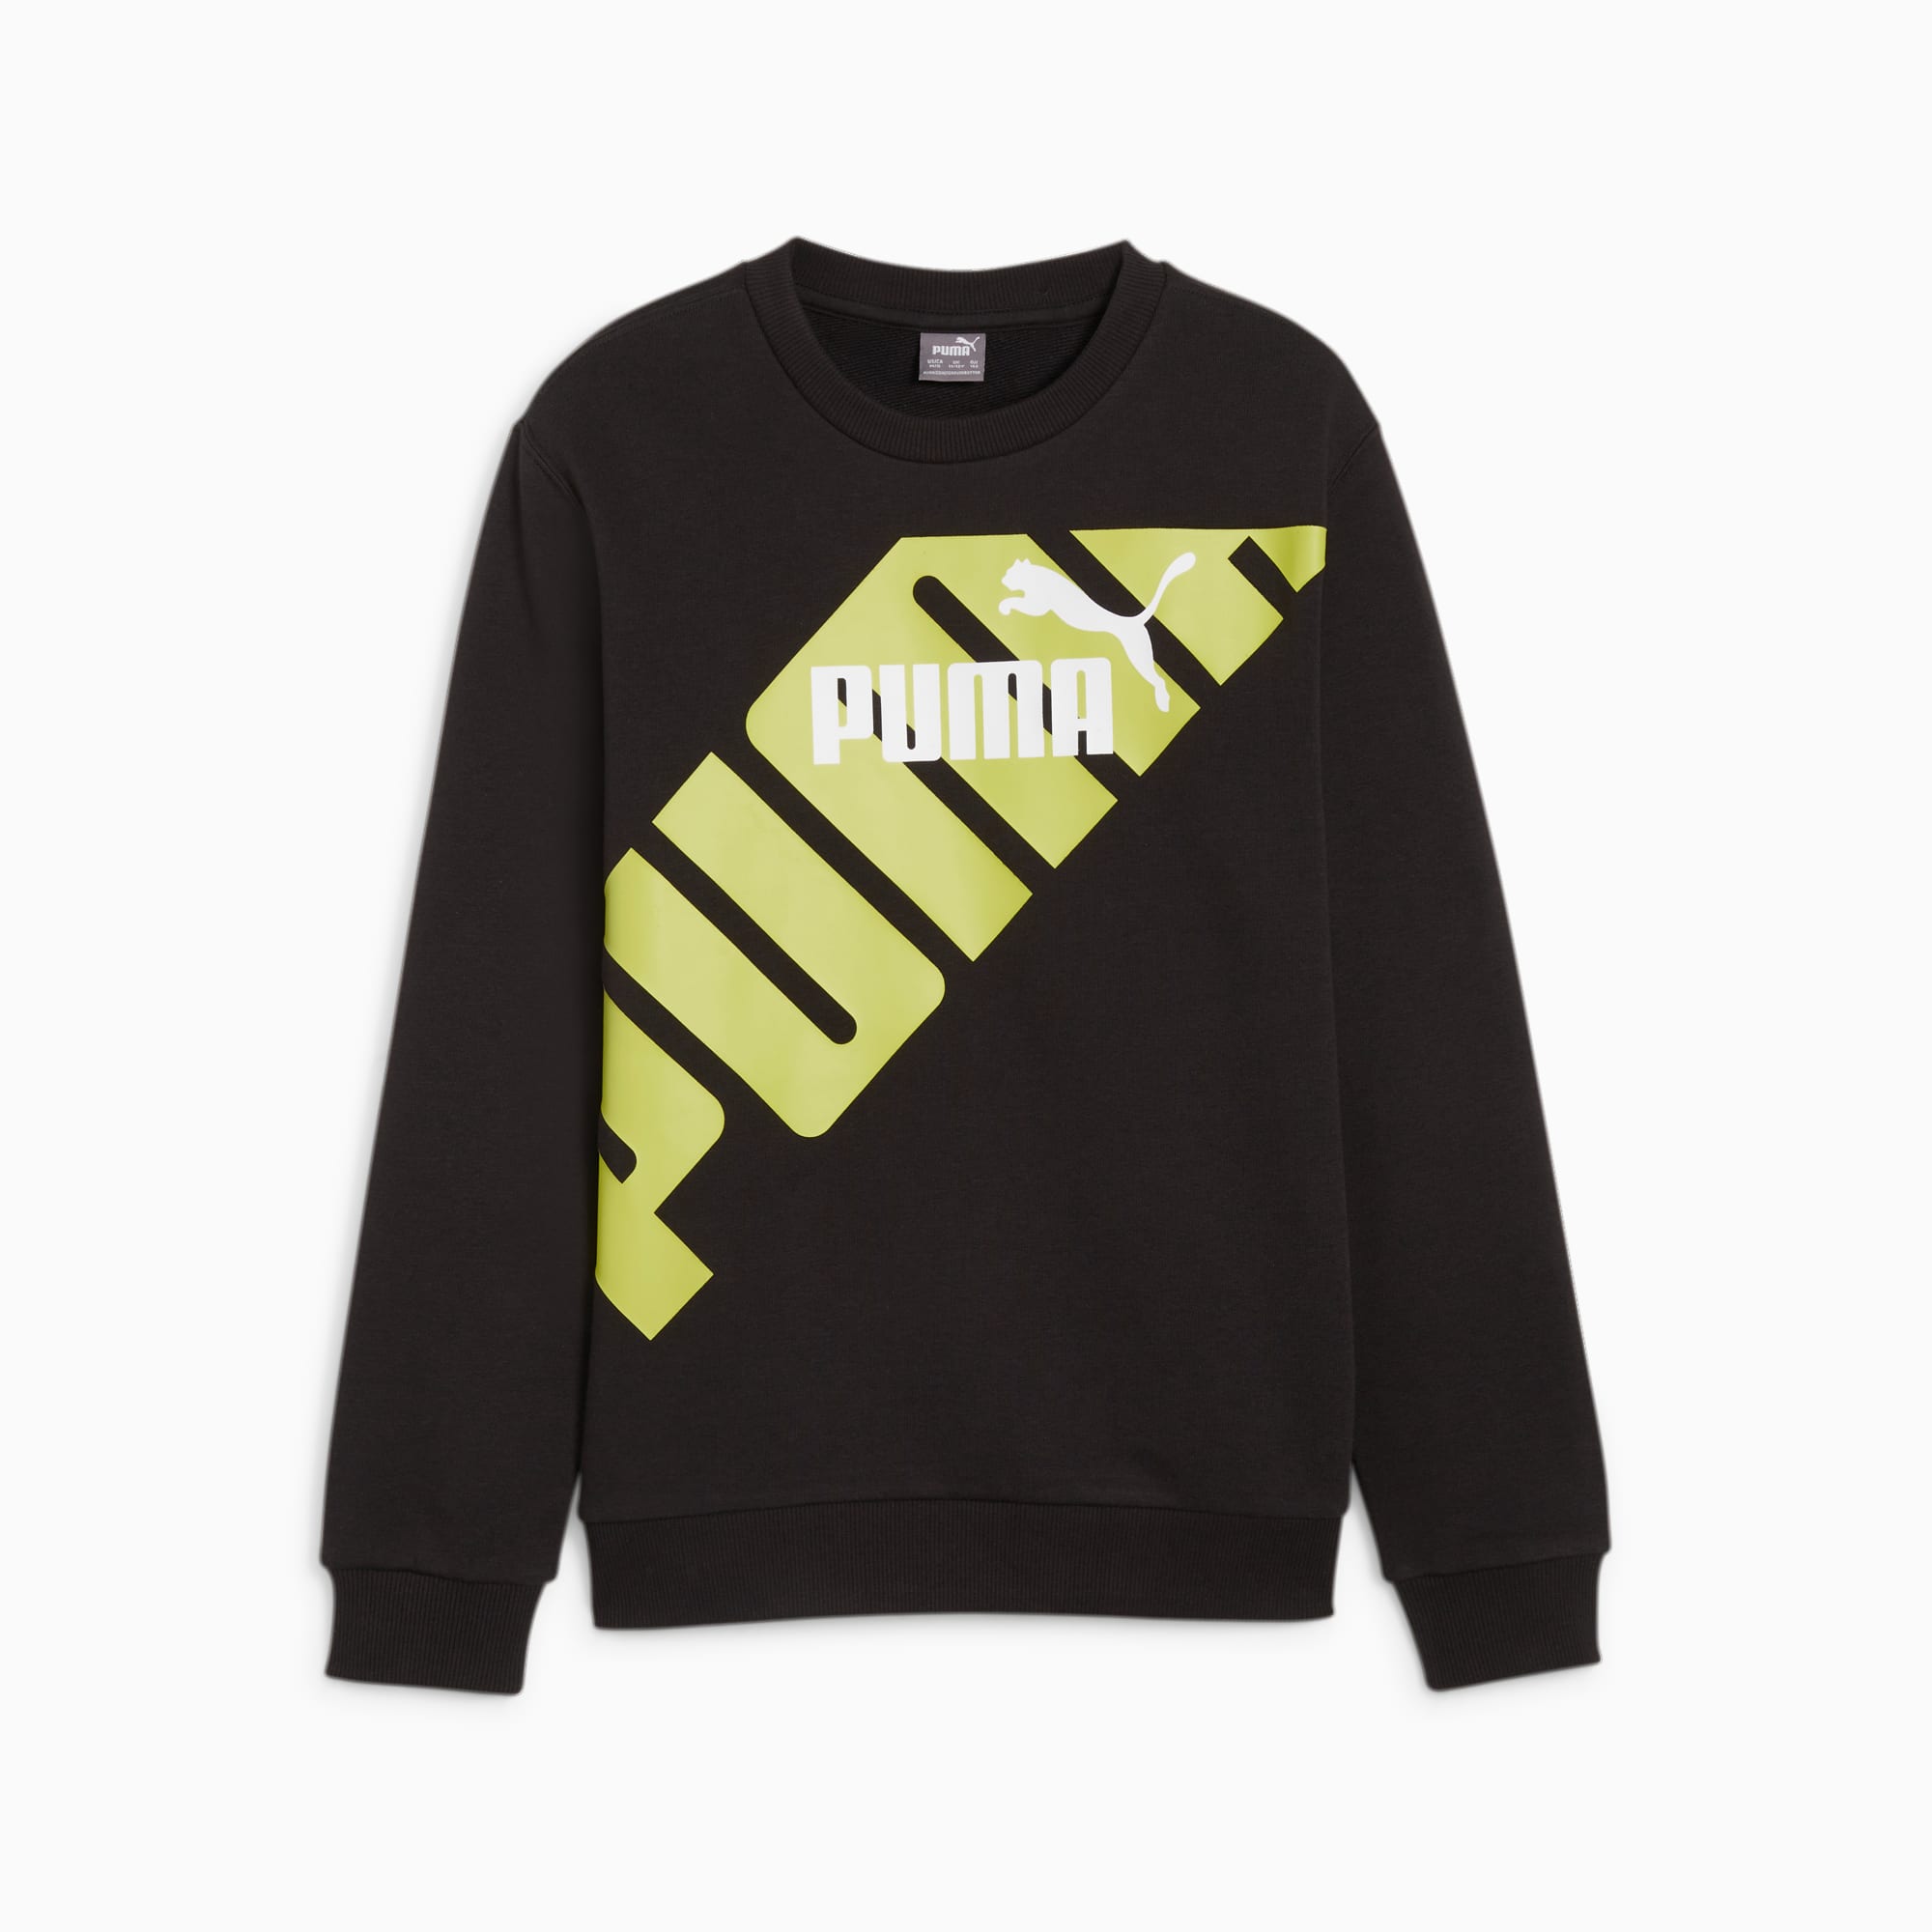 PUMA Power Youth Graphic Sweatshirt, Black, Size 128, Clothing